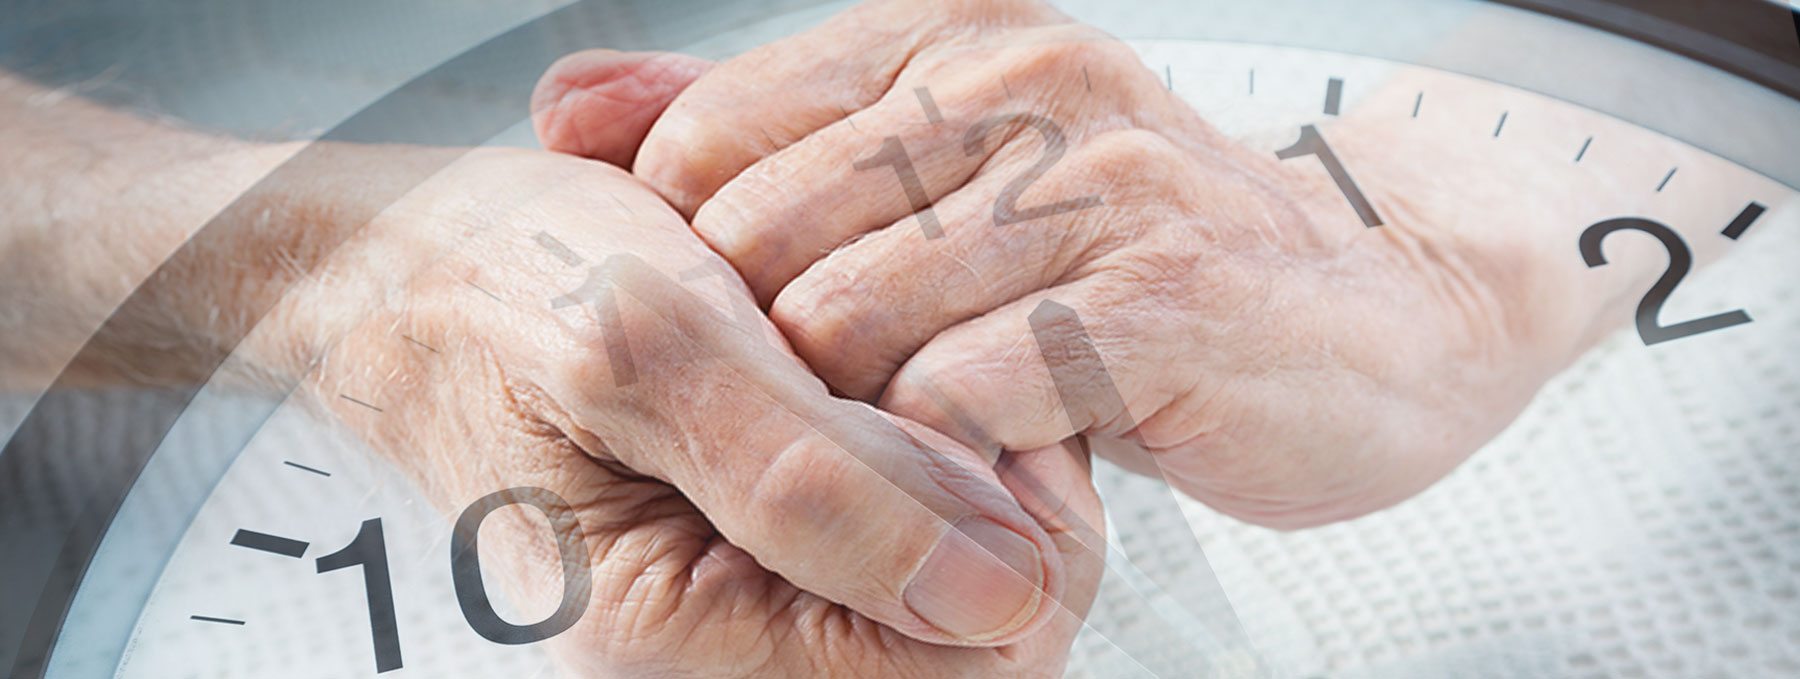 Applied Chronobiology in Rheumatoid Arthritis Could Lead ...